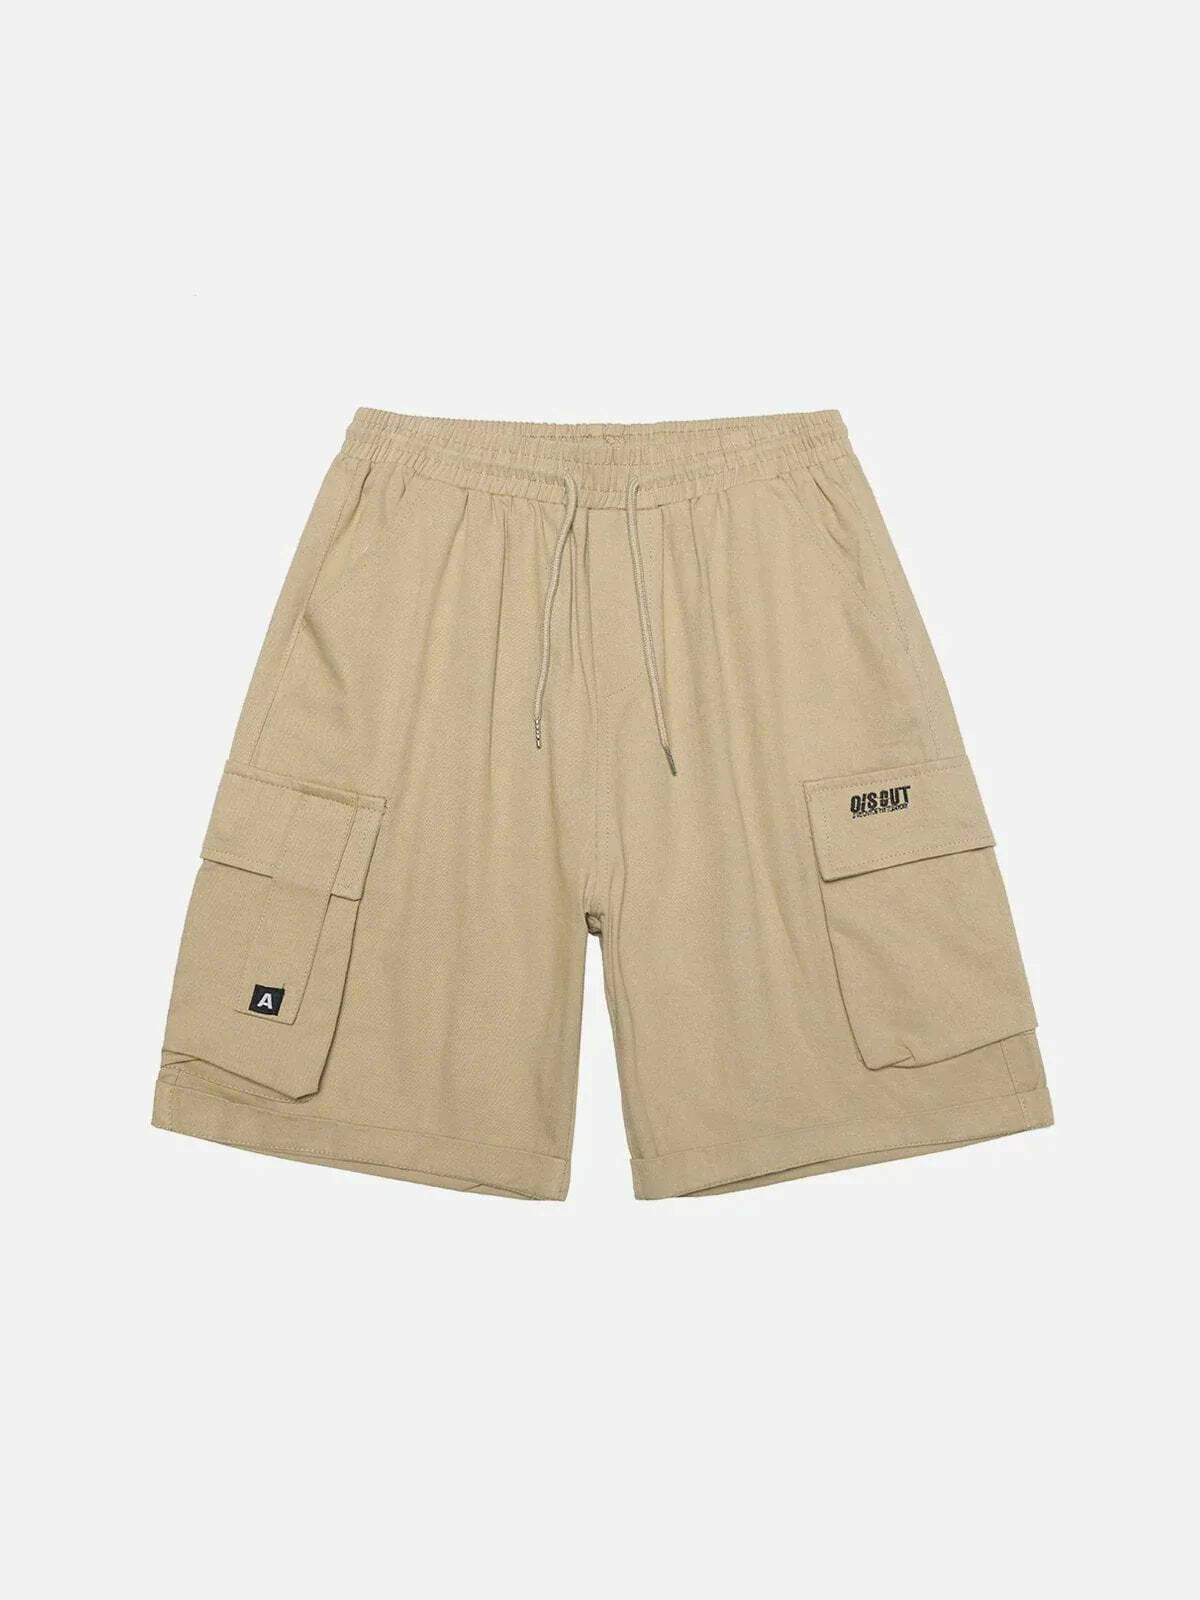 discreet side pocket shorts urban functional essential 4745